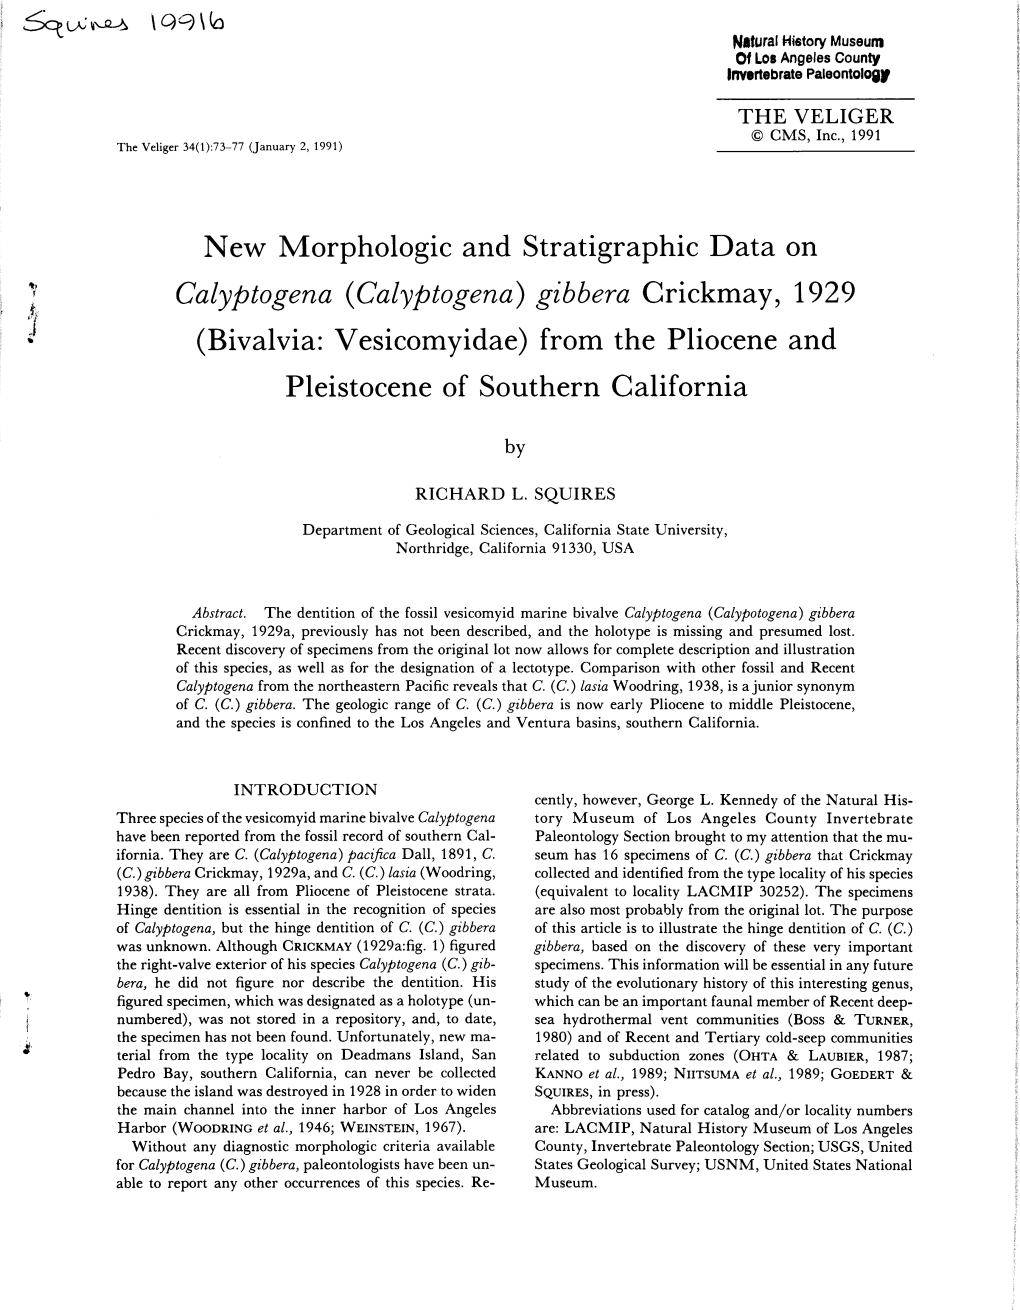 Calyptogena (Calyptogena) Gibbera Crickmay, 1929 (Bivalvia: Vesicomyidae) from the Pliocene and Pleistocene of Southern California